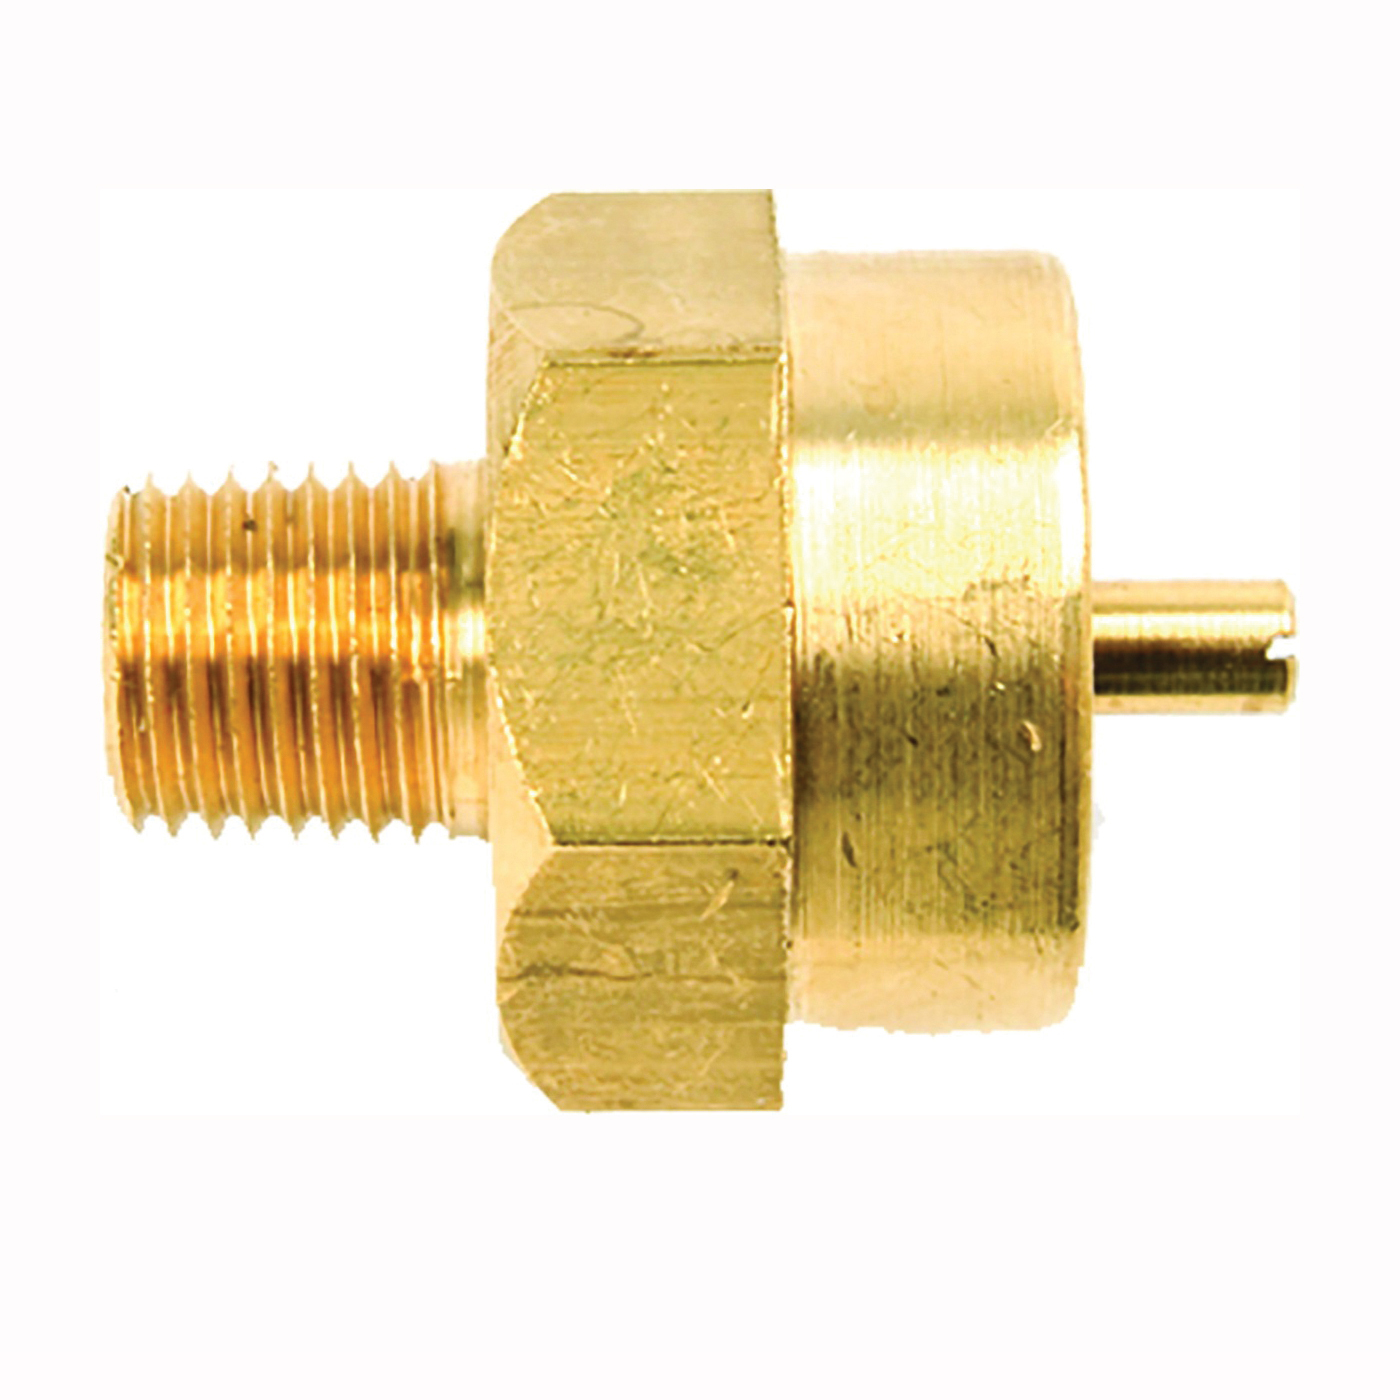 F273754 Cylinder Adapter, Brass